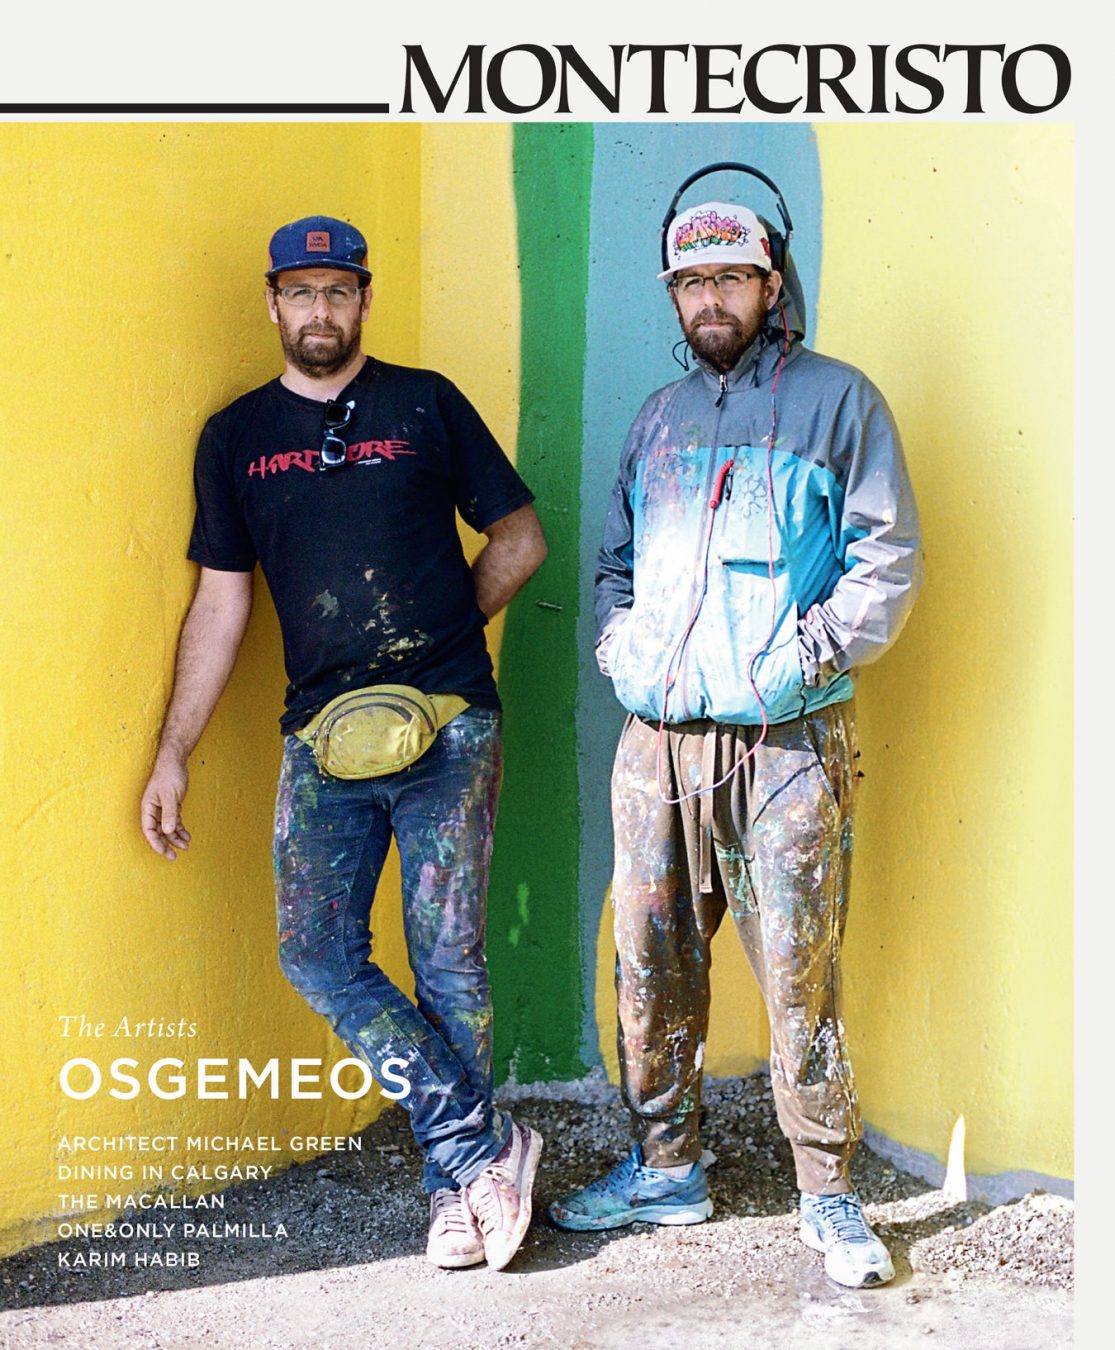 MONTECRISTO Autumn 2014 issue featuring OSGEMEOS.